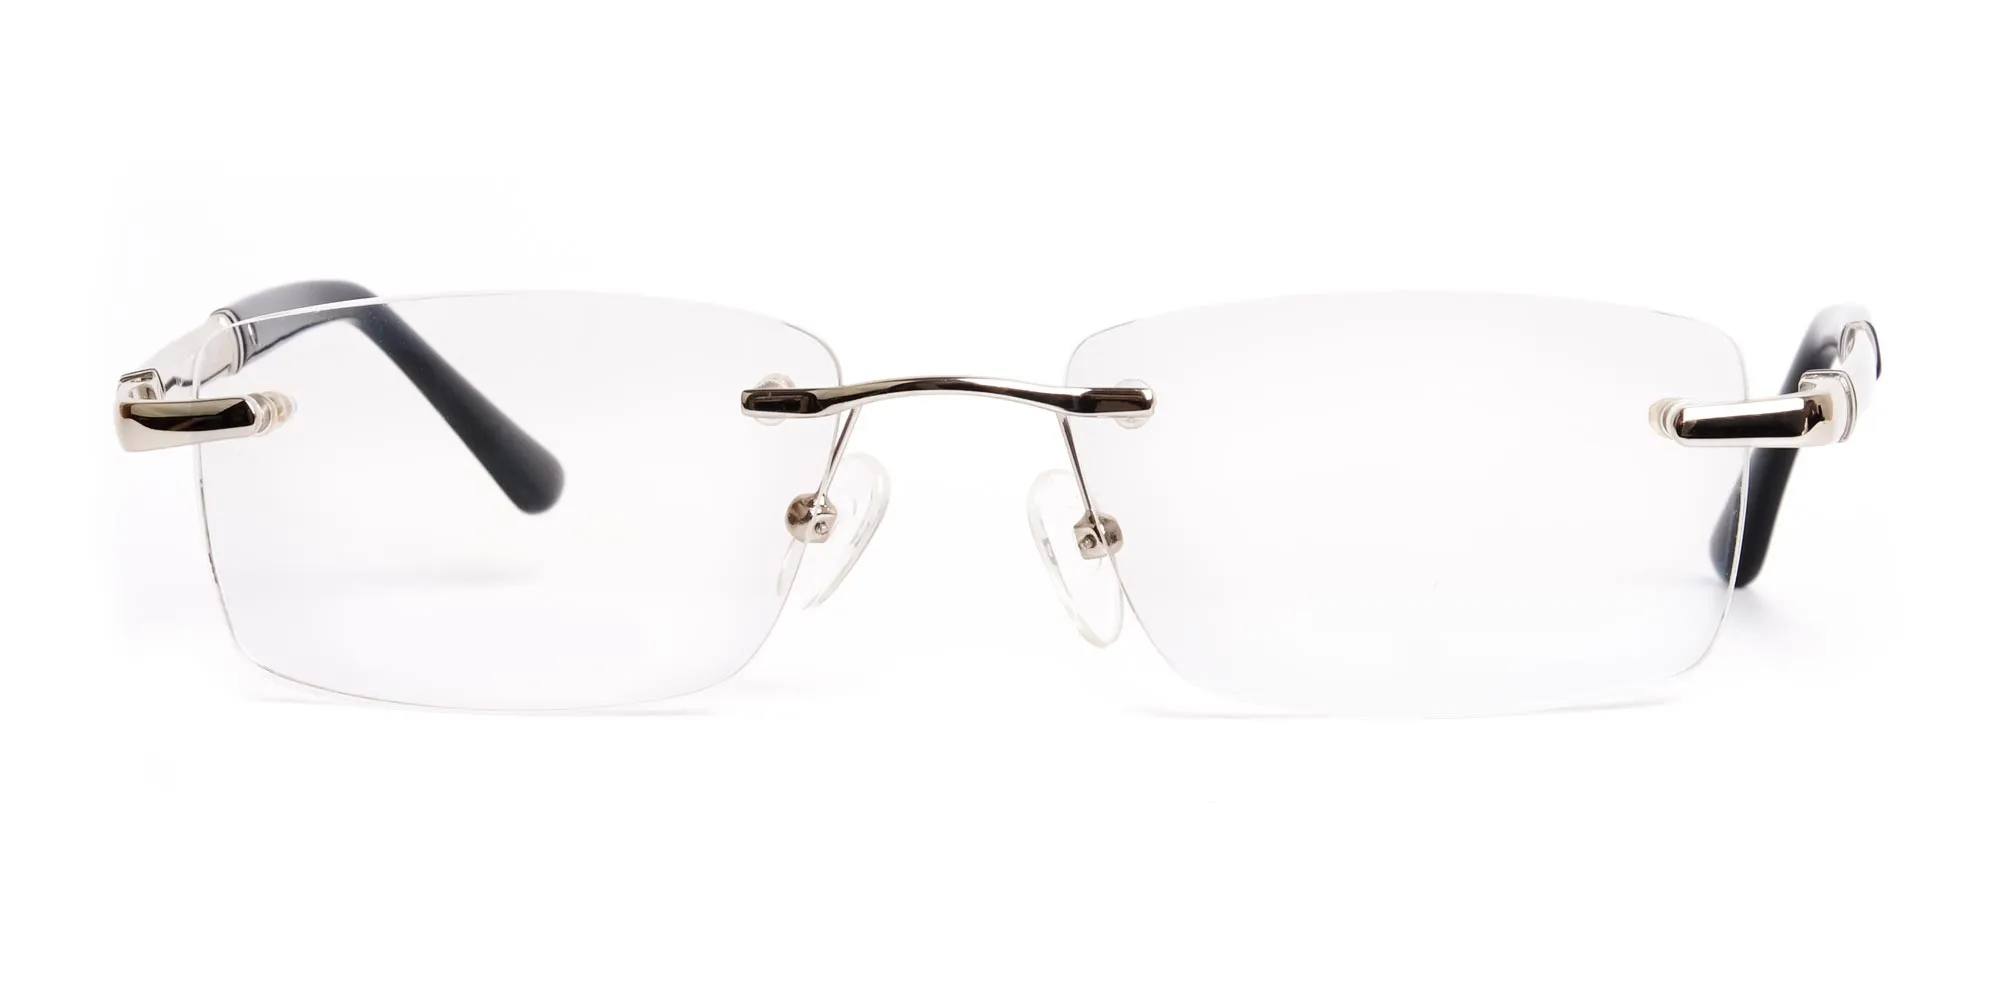 silver and black rectangular rimless glasses frames-2